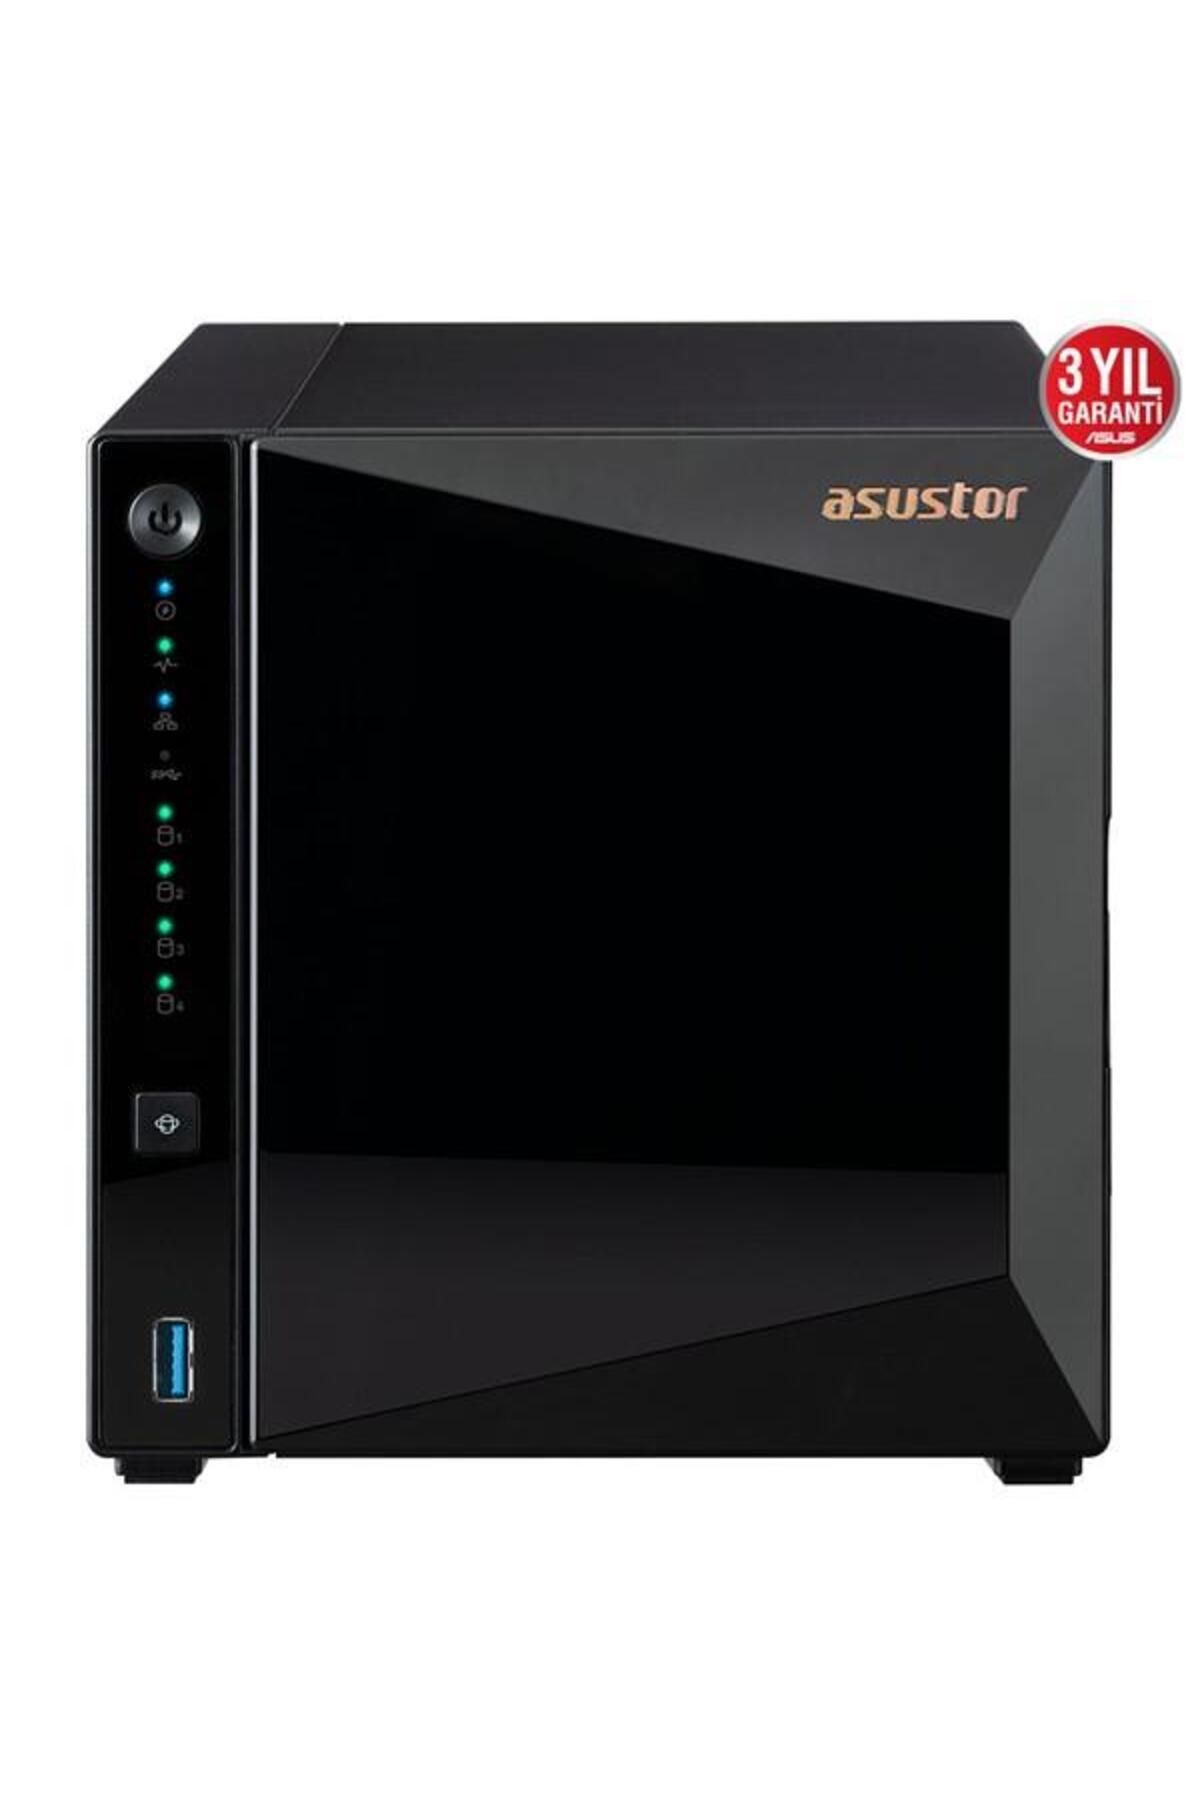 Asustor As3304t Realtek Qc 2 Gb Ram- 4-diskli Nas Server (DİSKSİZ)